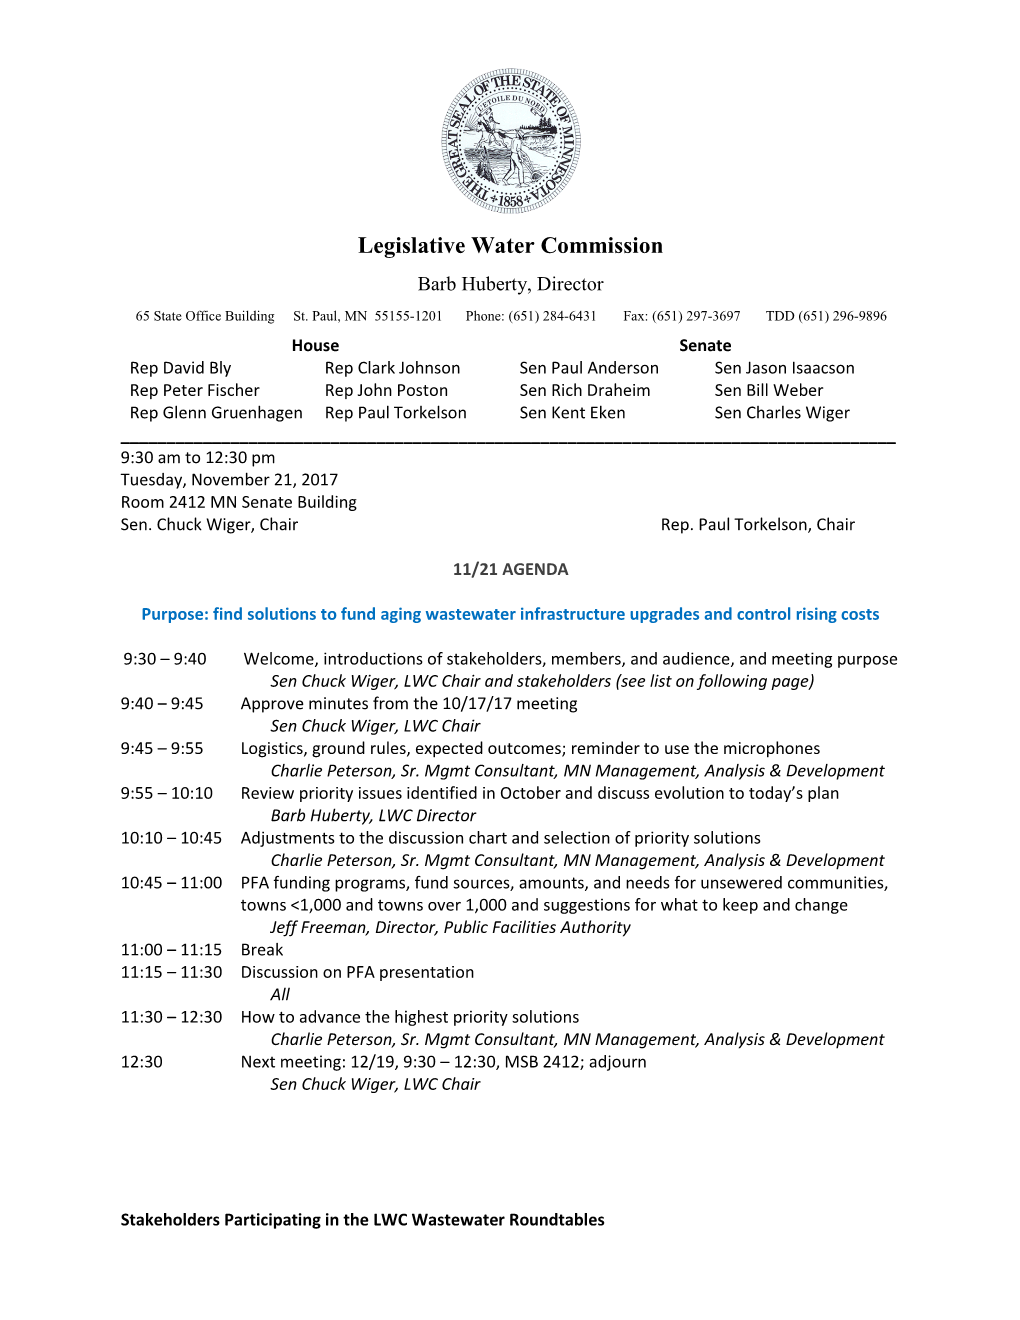 Legislative Water Commission November Meeting Notice